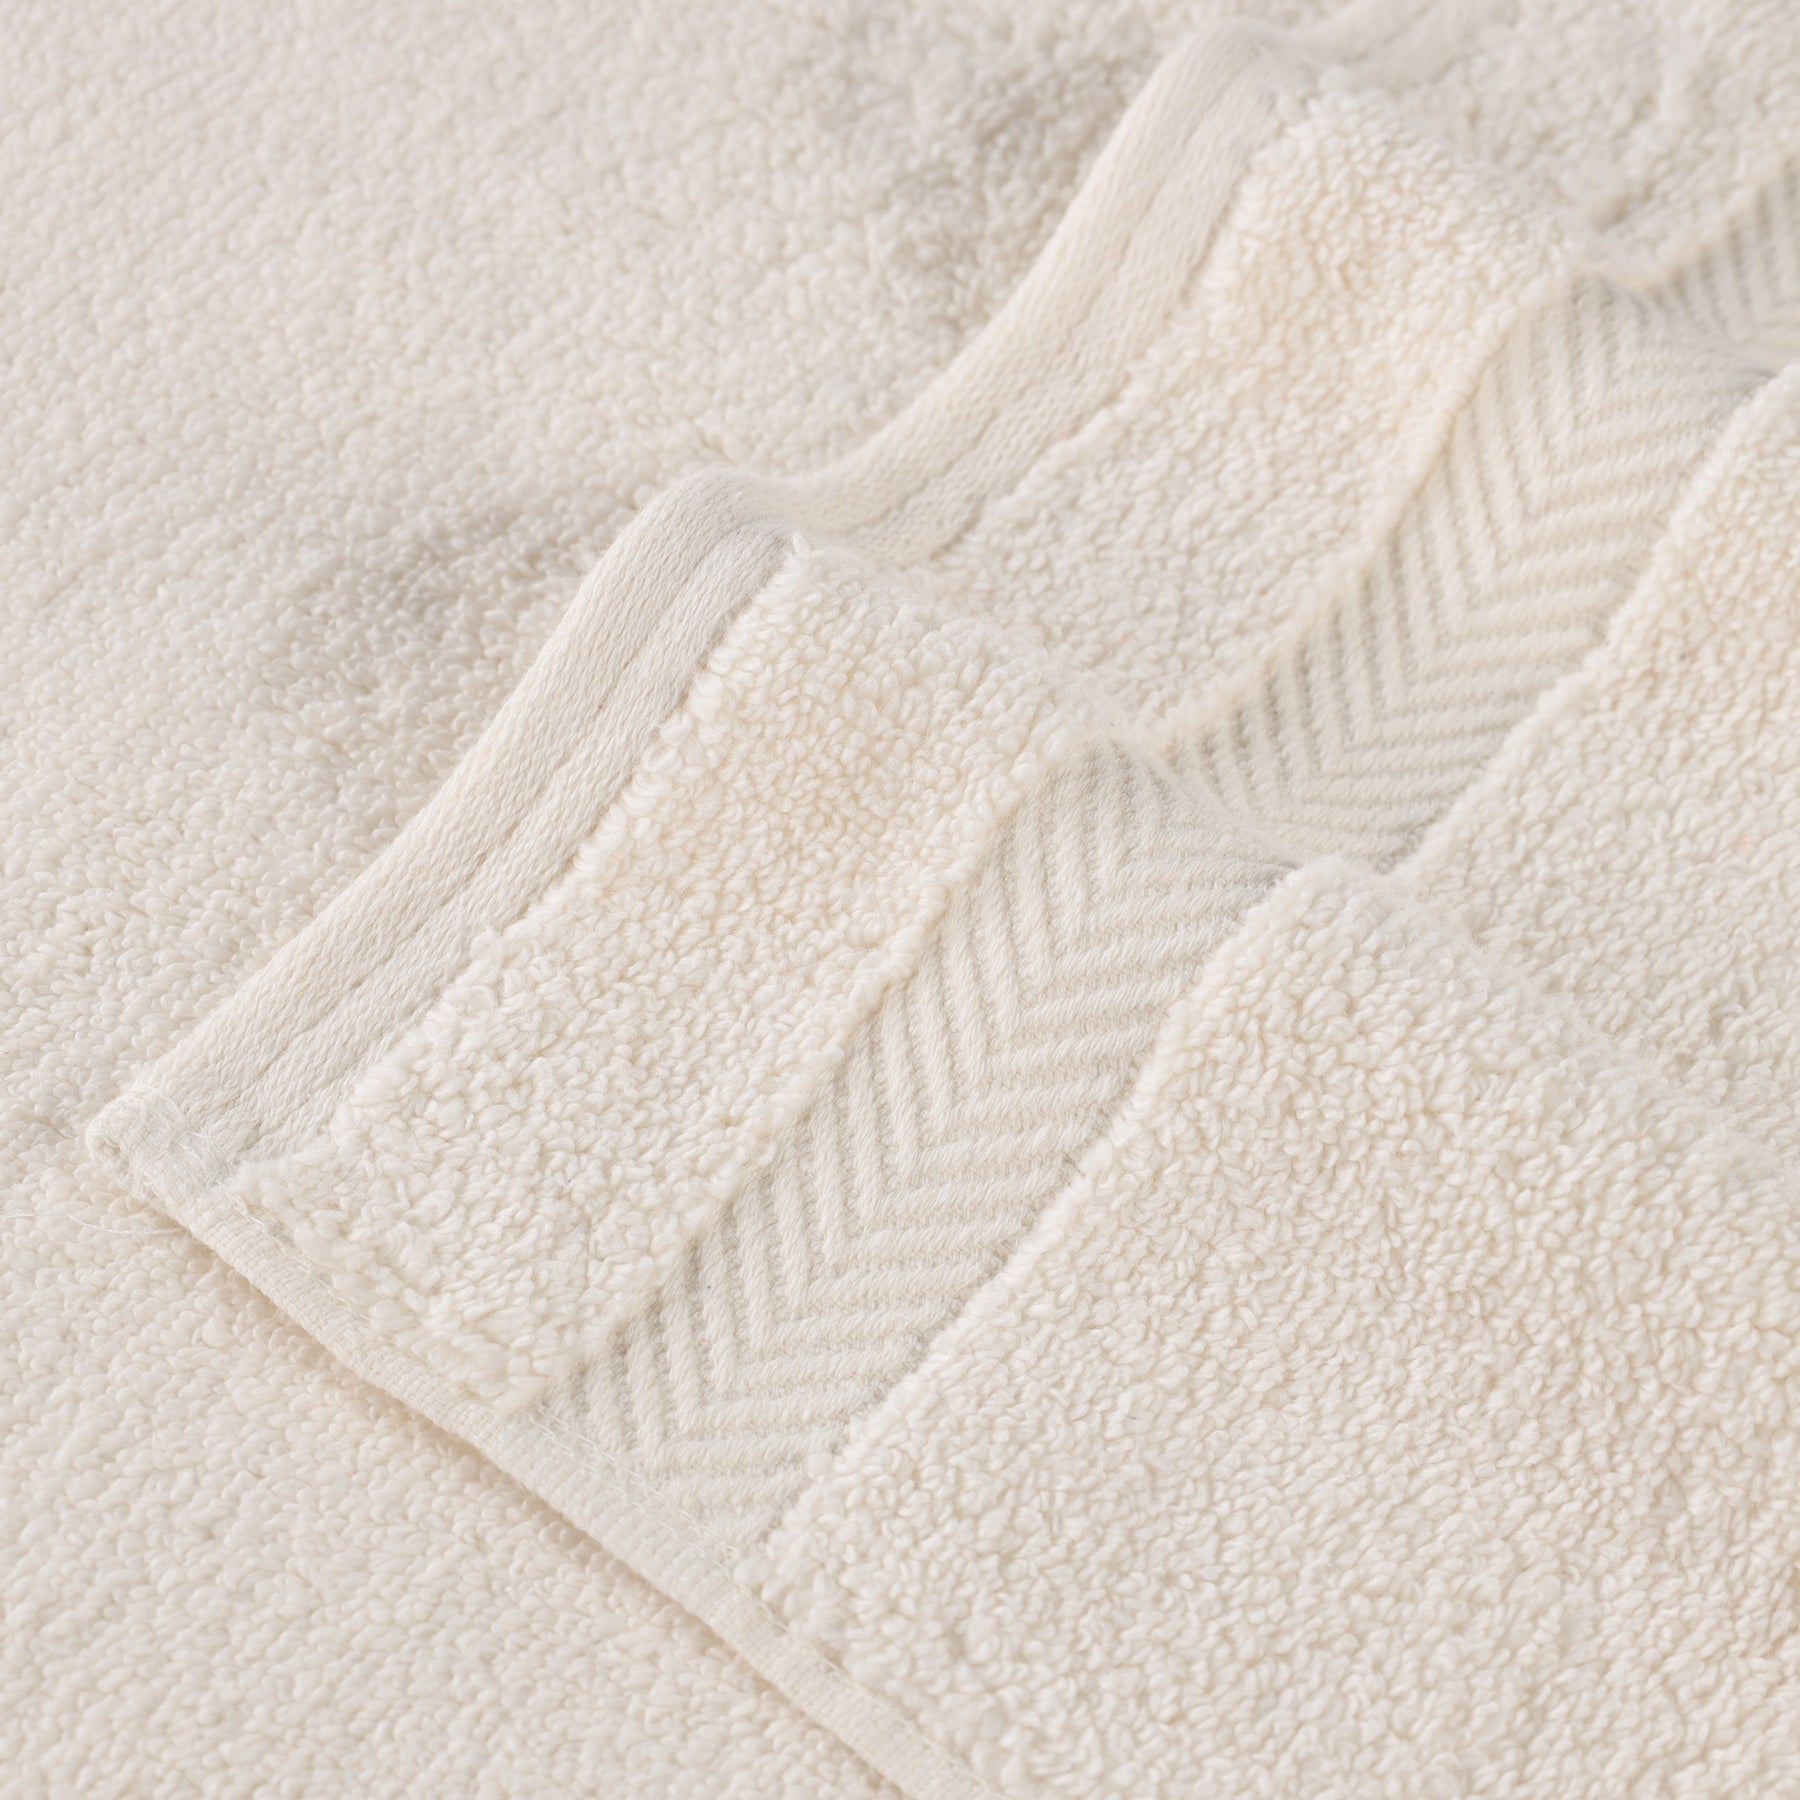 Zero Twist Cotton Ultra-Soft Absorbent Face Towel Washcloth - Ivory